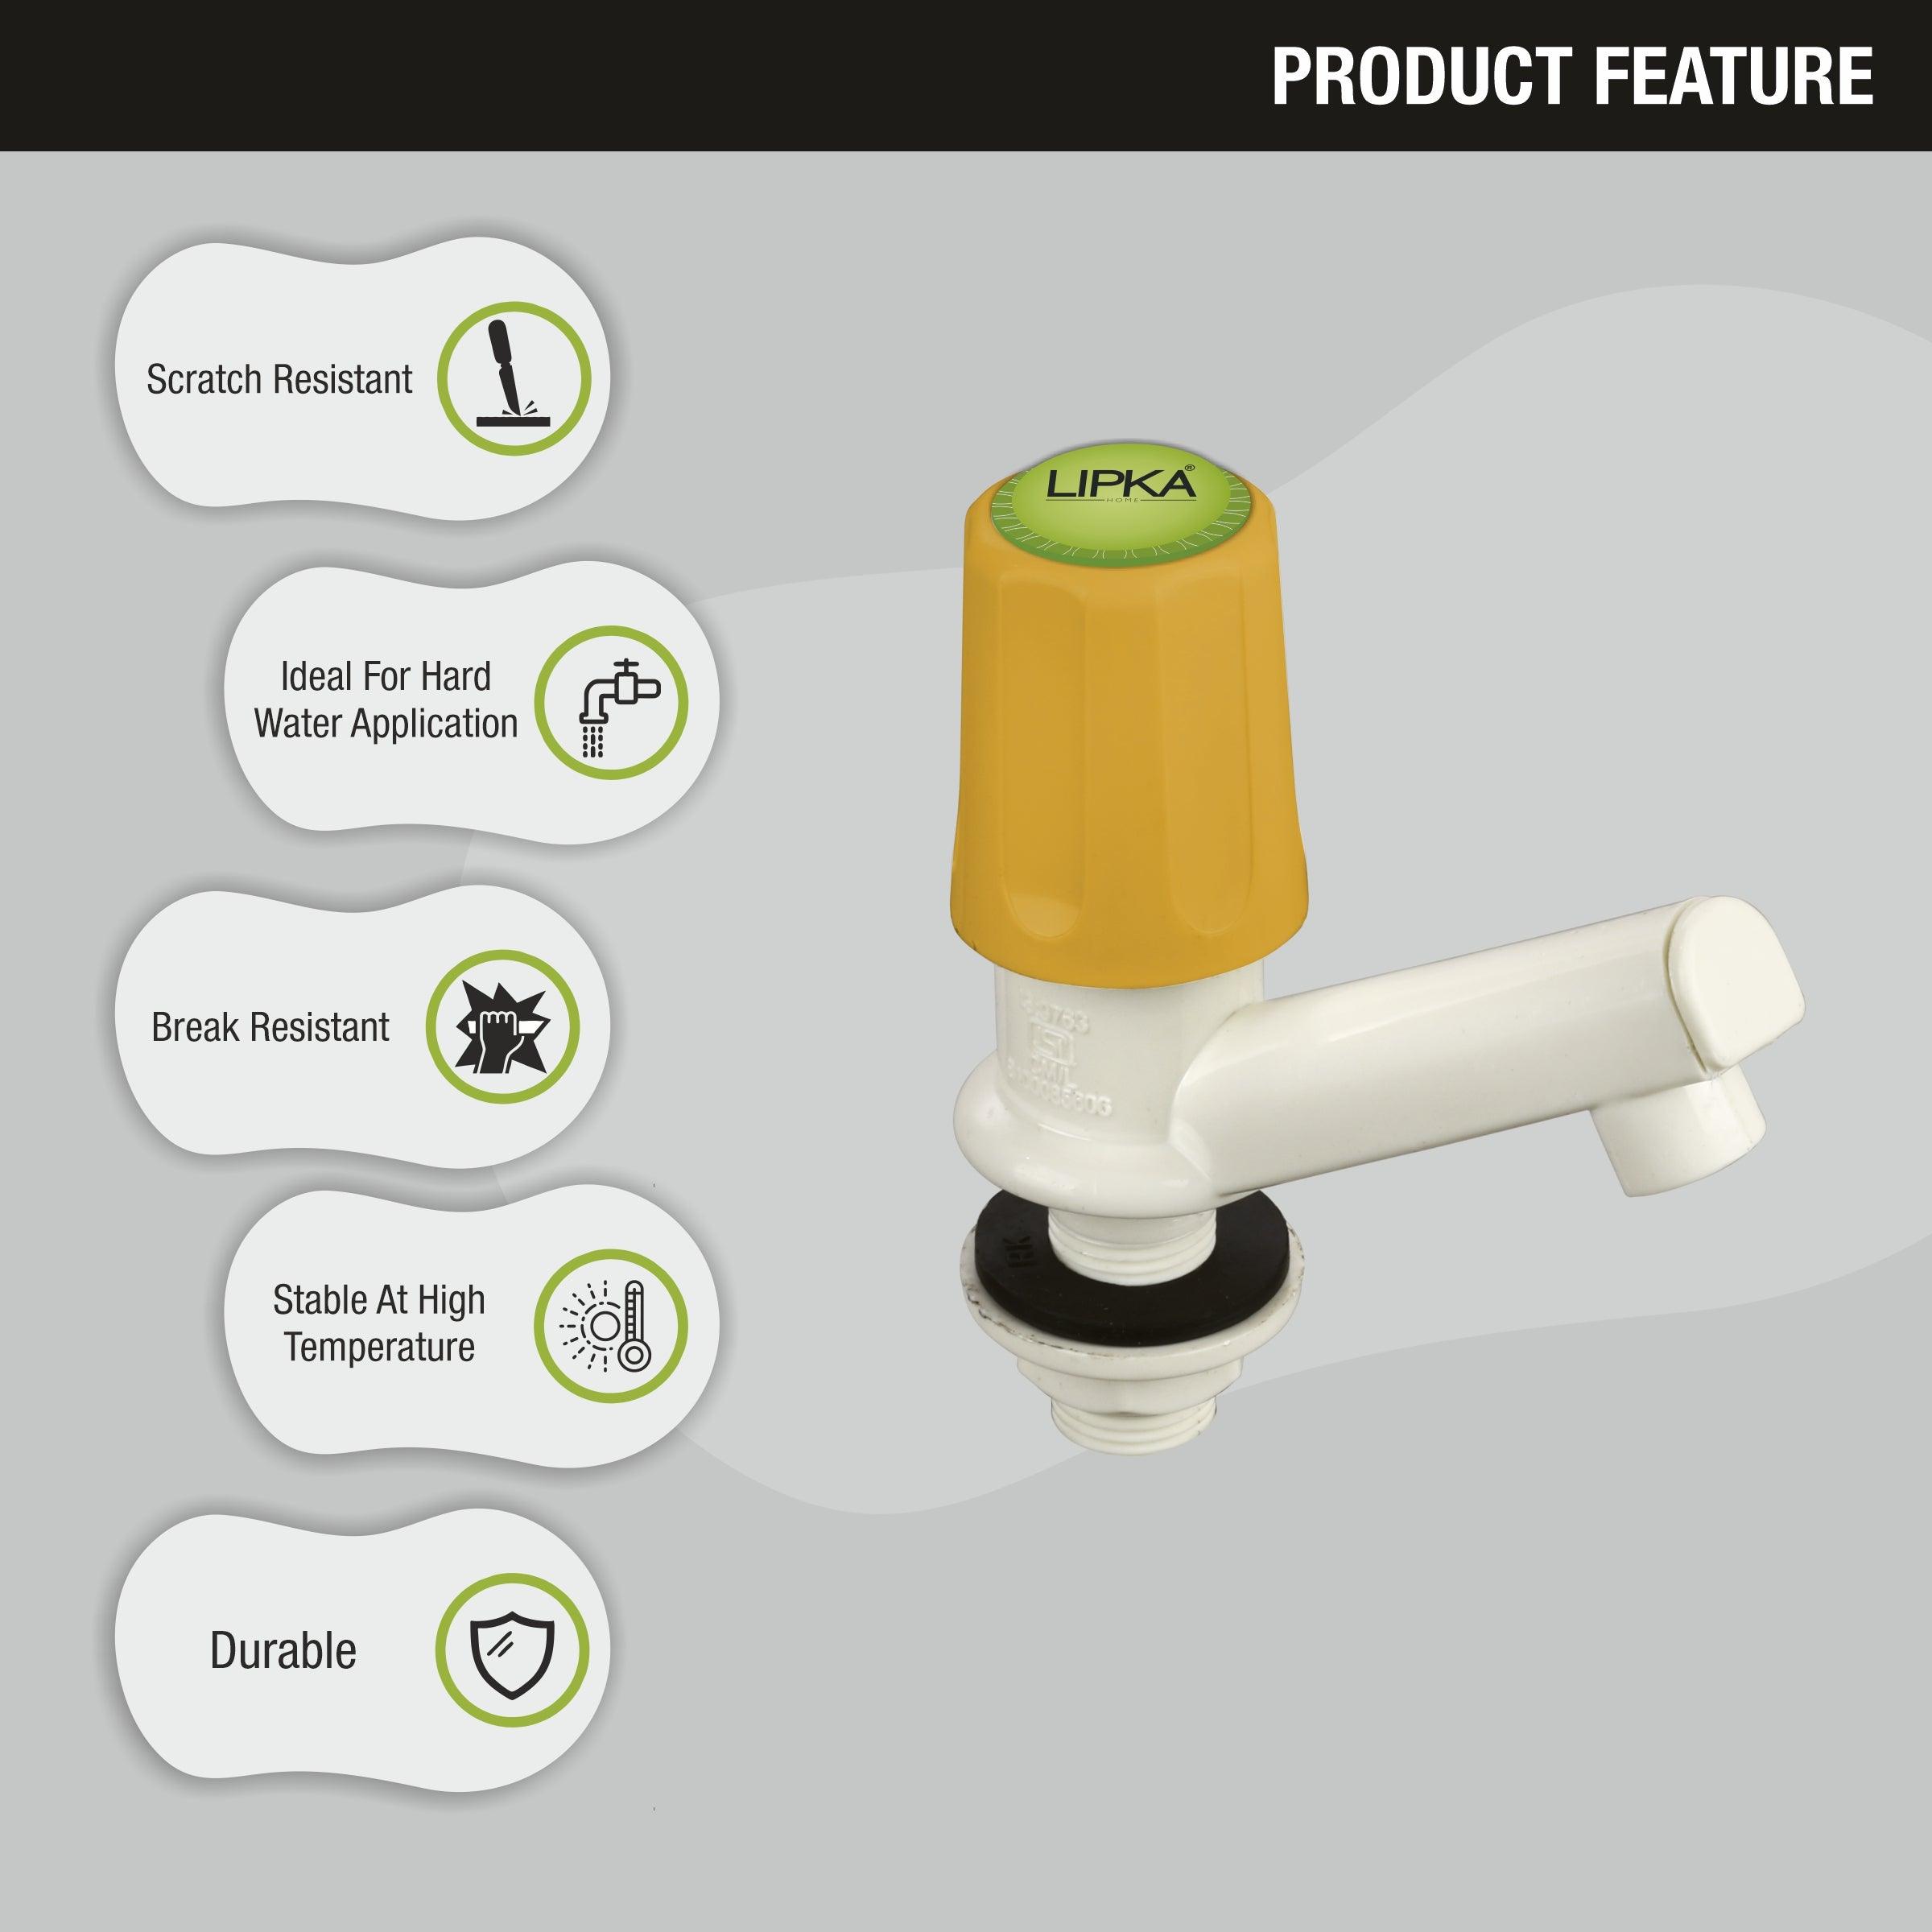 Grand Pillar Tap PTMT Faucet features